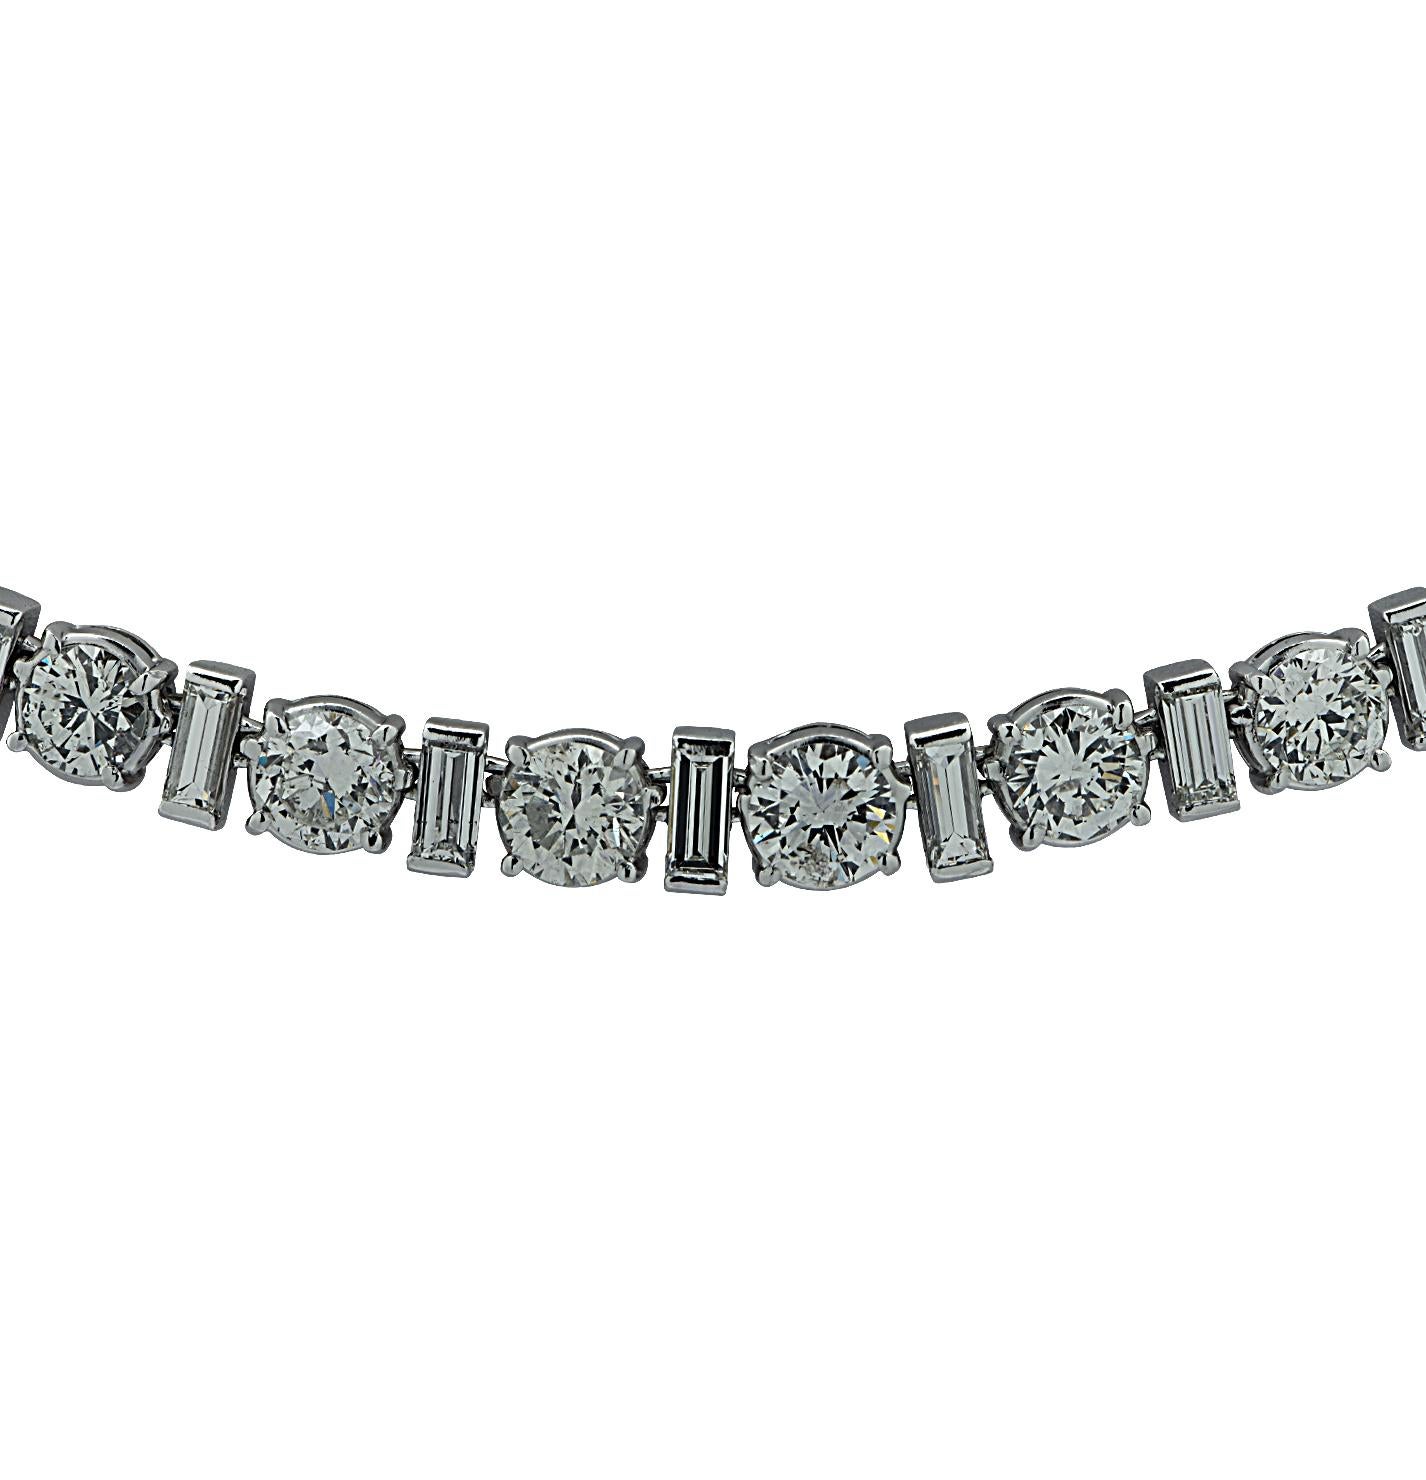 Women's or Men's 22 Carat Diamond Riviere Necklace